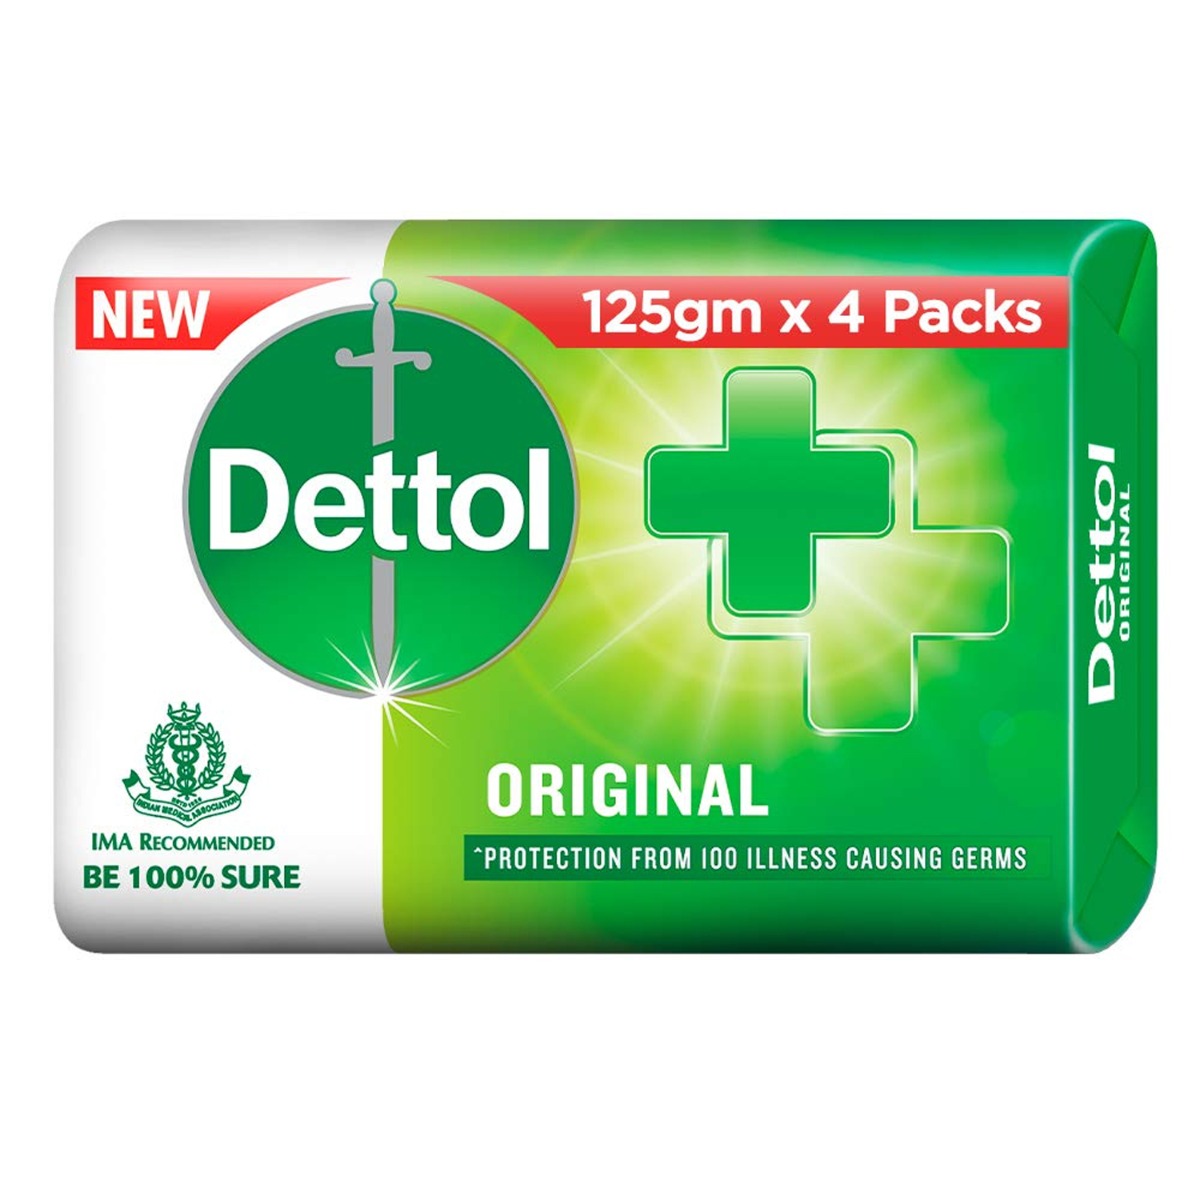 Dettol Orignal Soap - Pack of 4, 125gm each